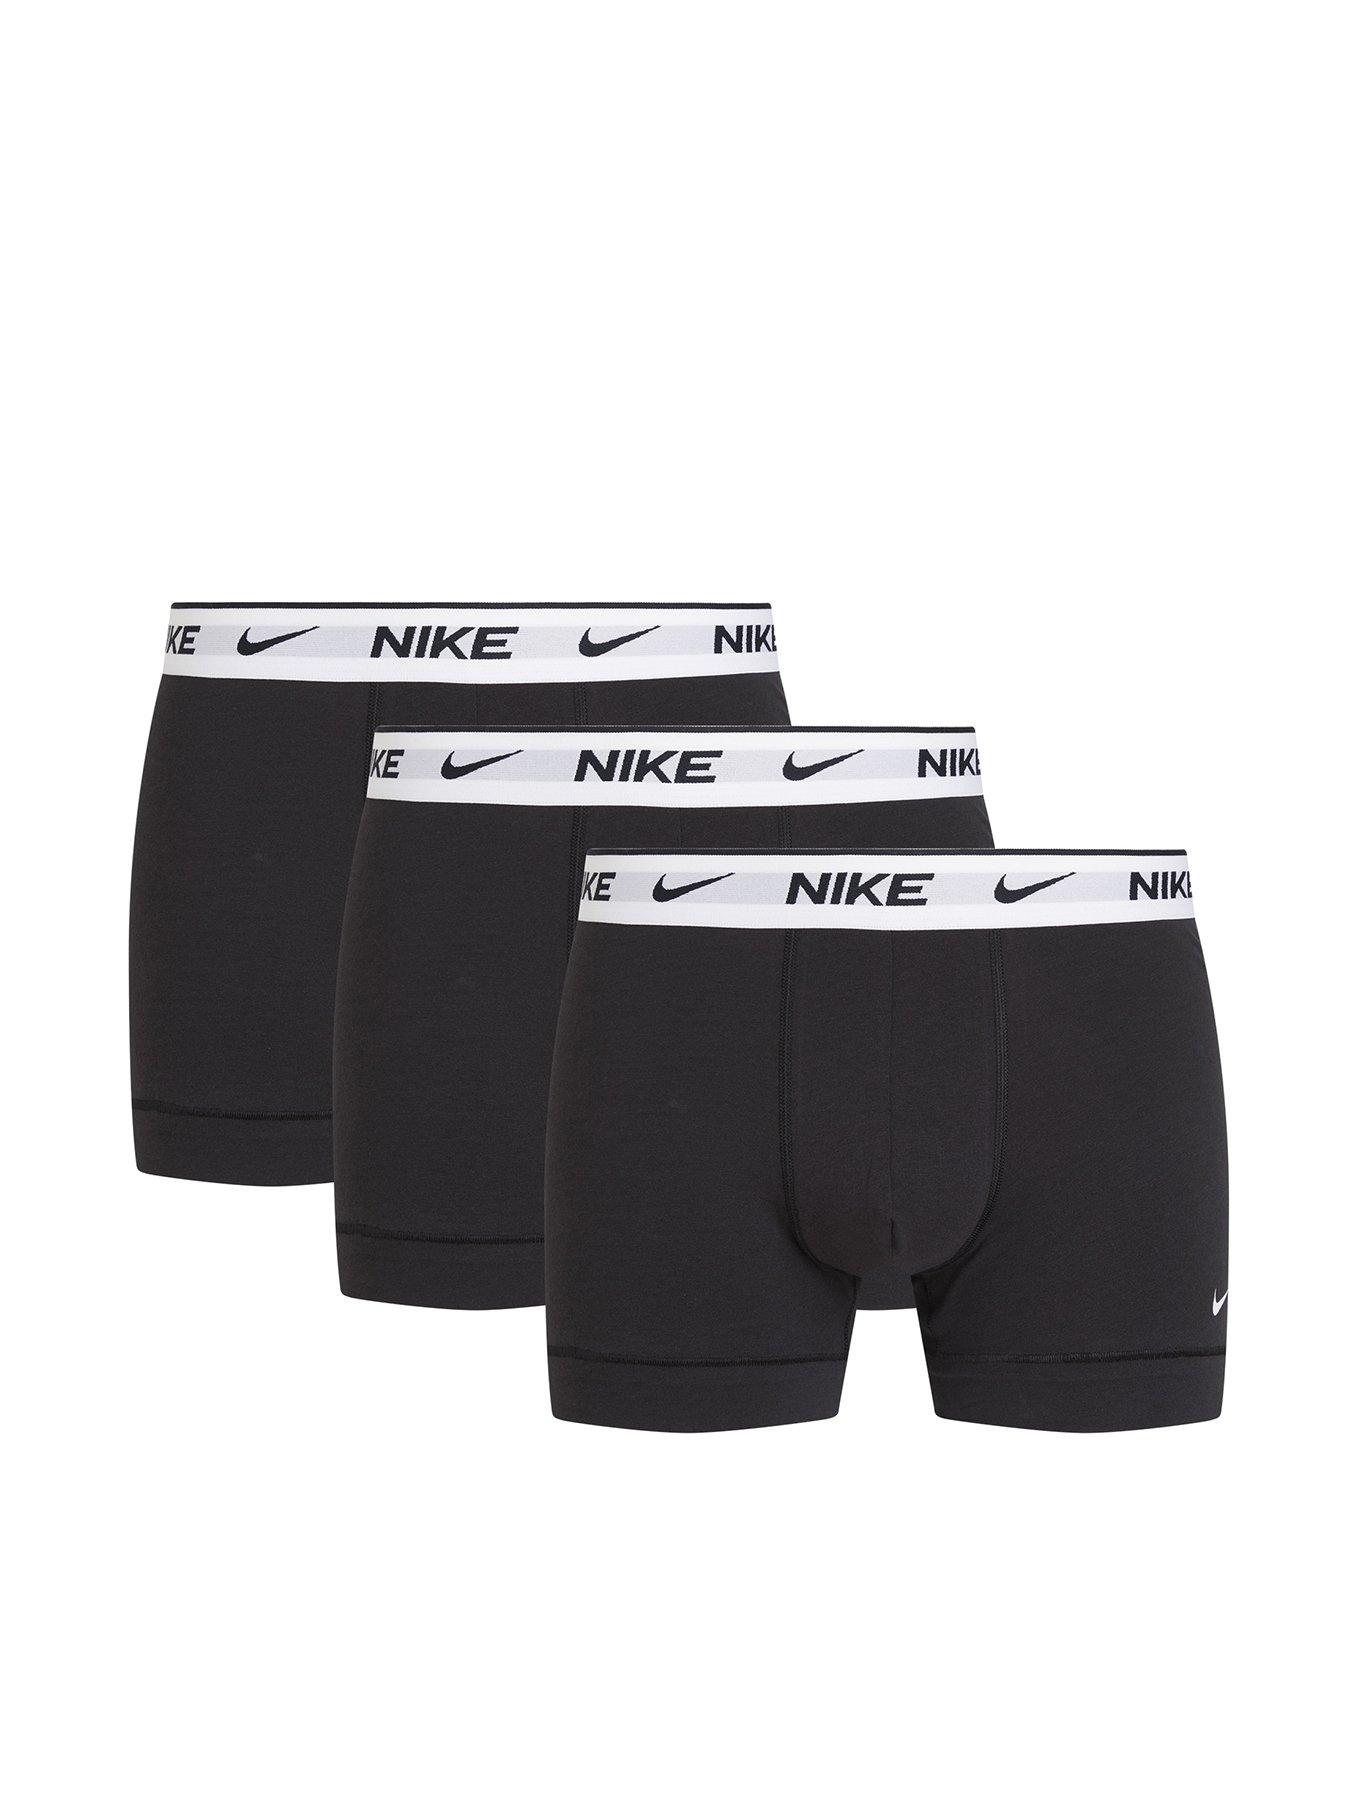 Plus Size Womens Underwear Joe Boxer Boyshort 5 Pack -  New Zealand